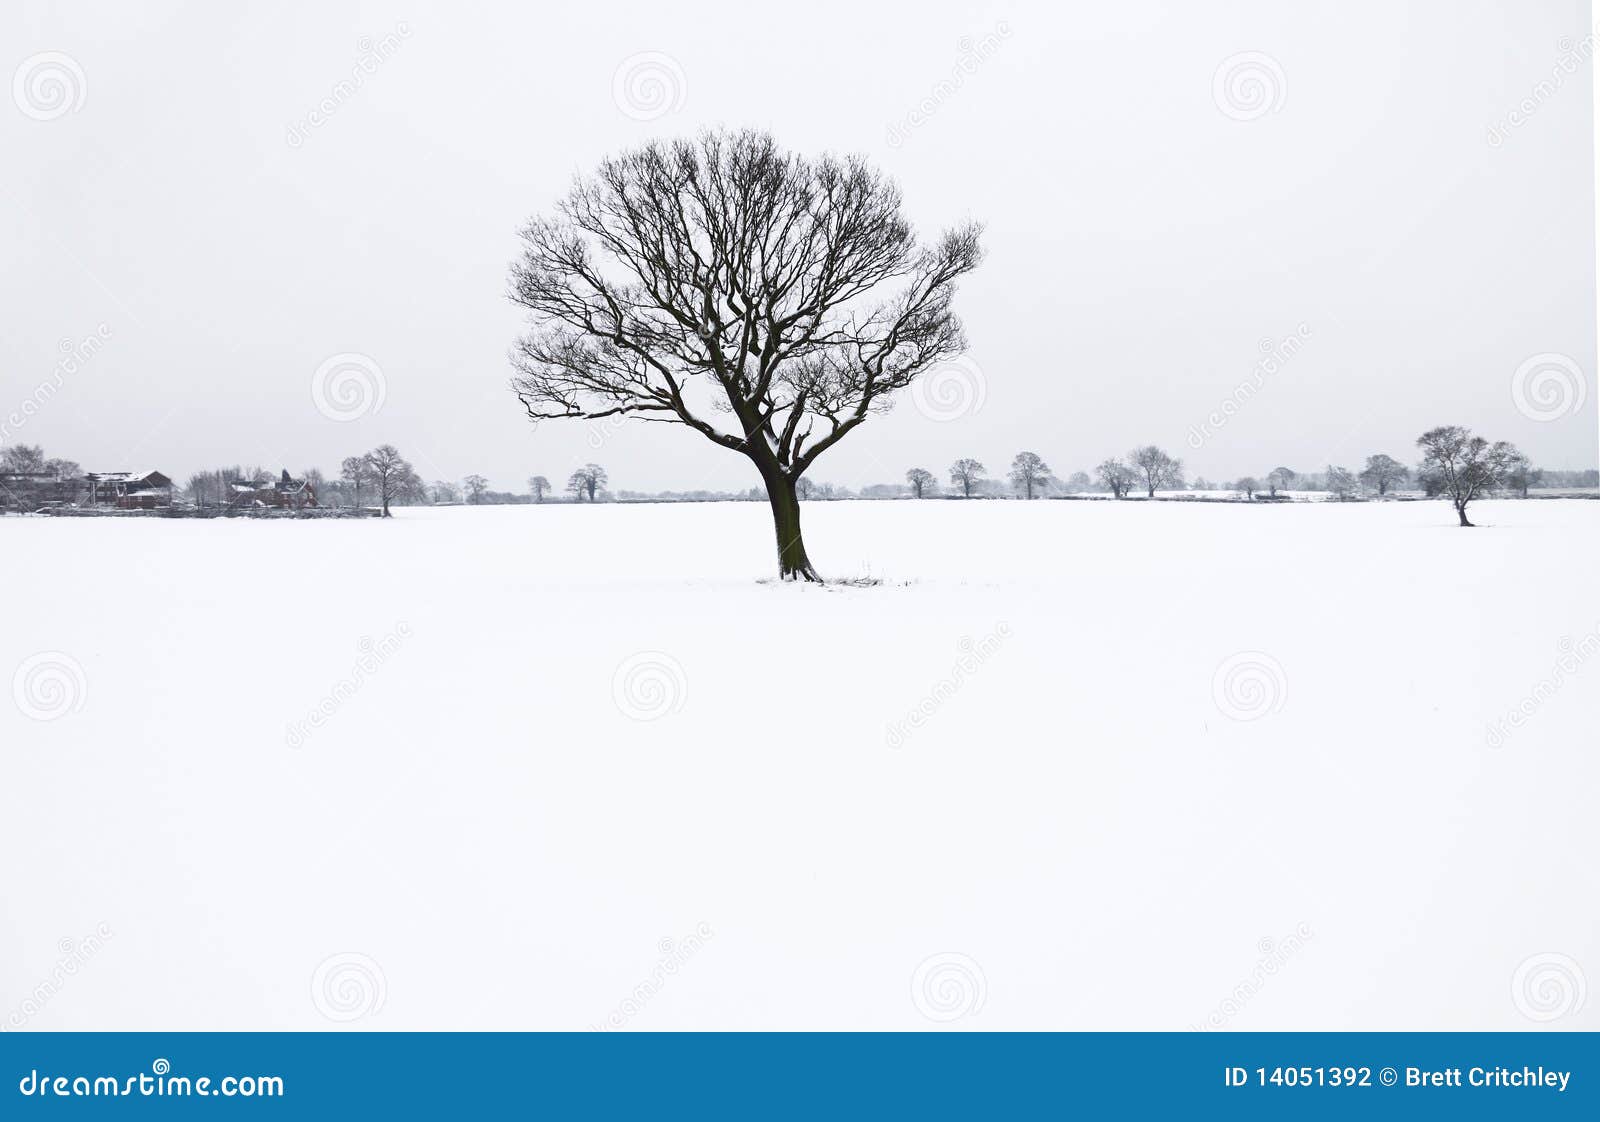 winter lone bare tree